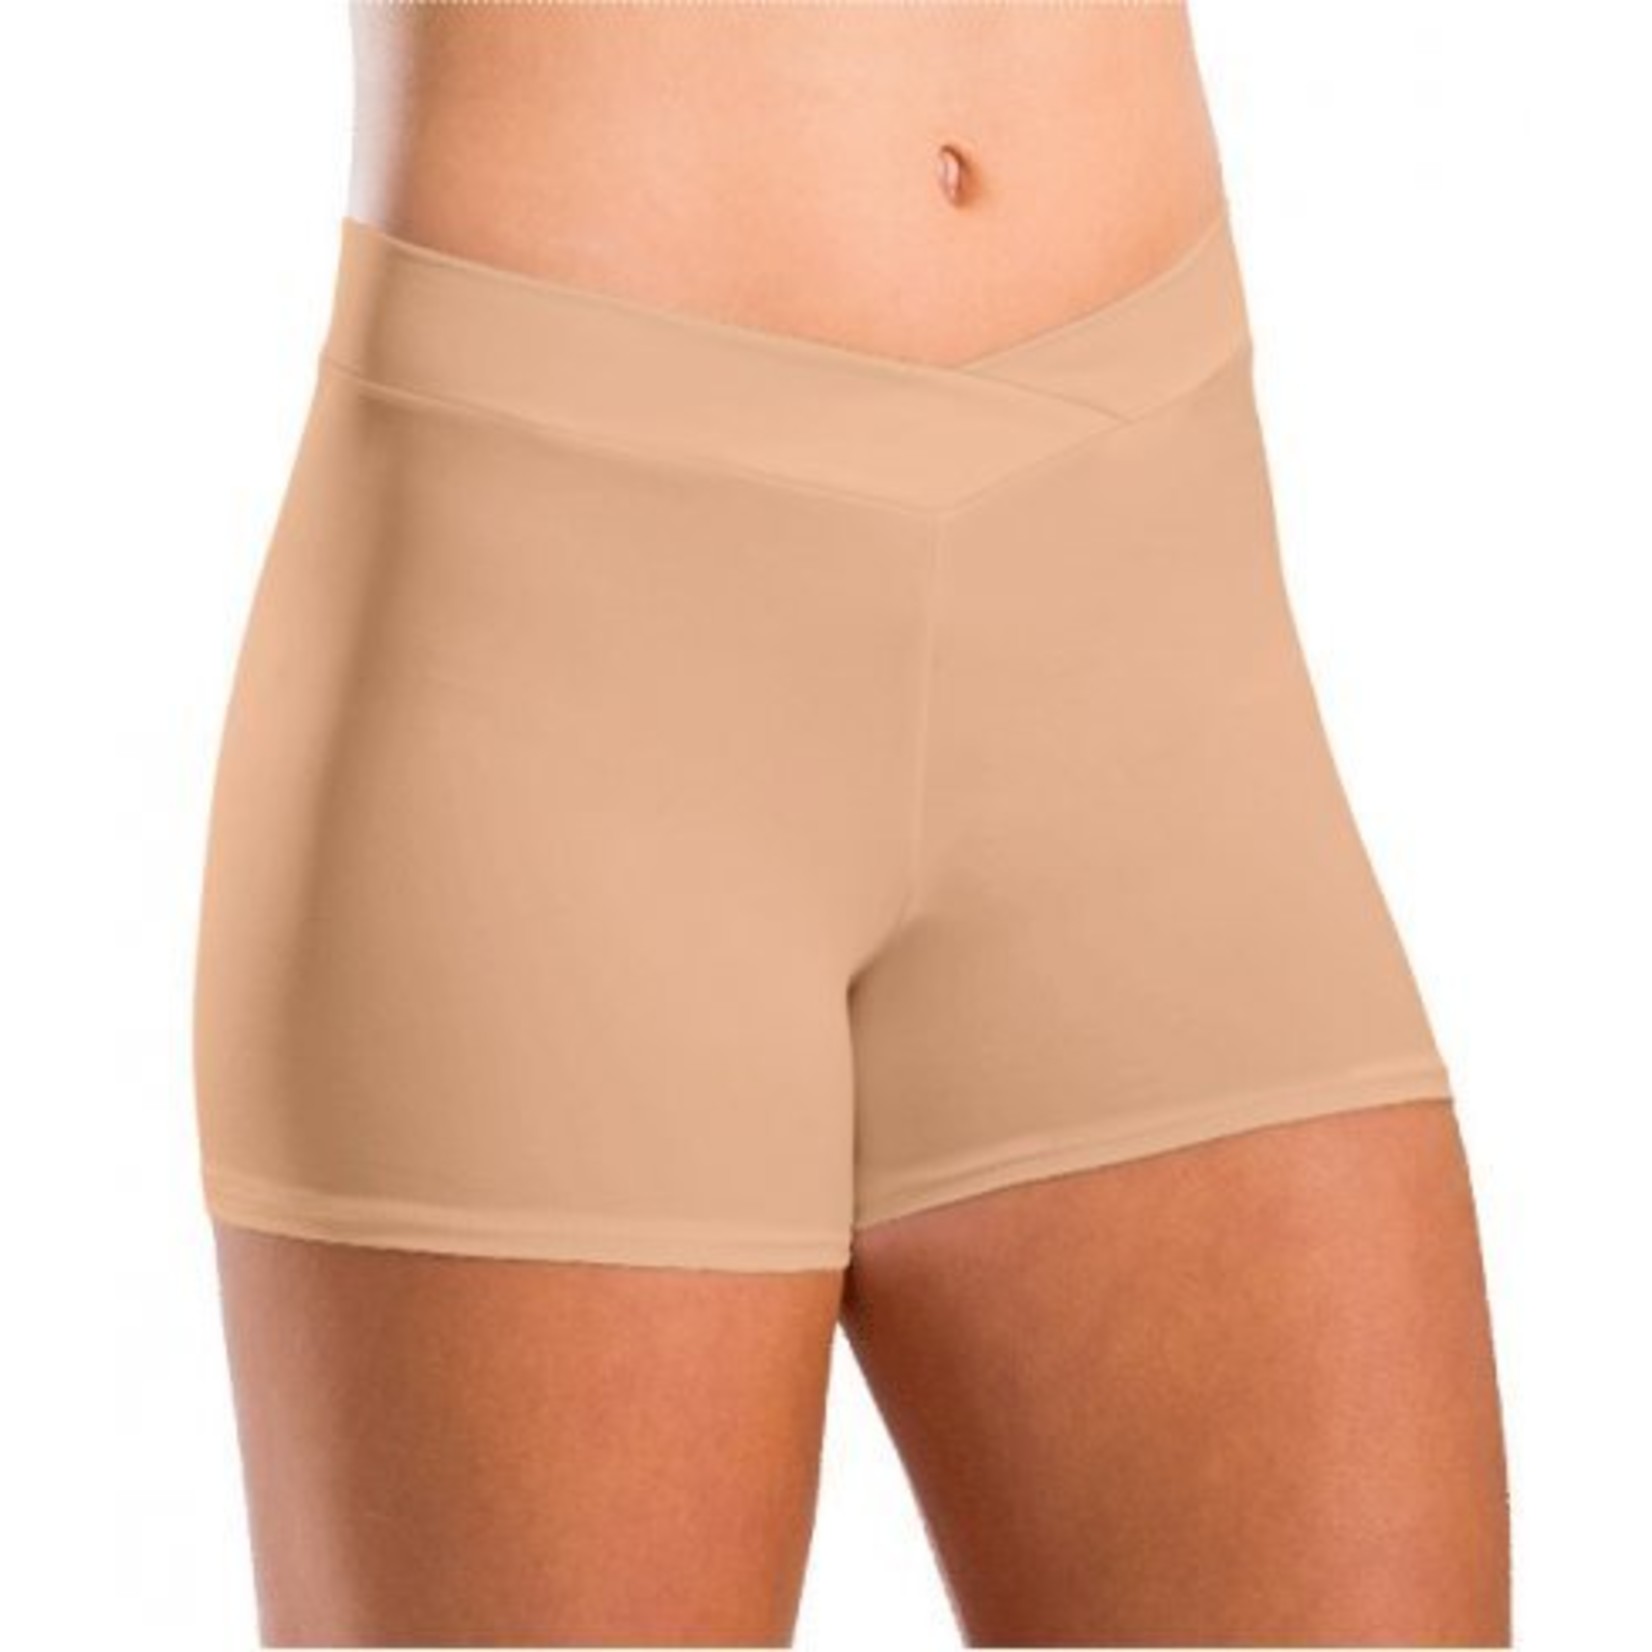 Motionwear 7113 V-Waist Shorts